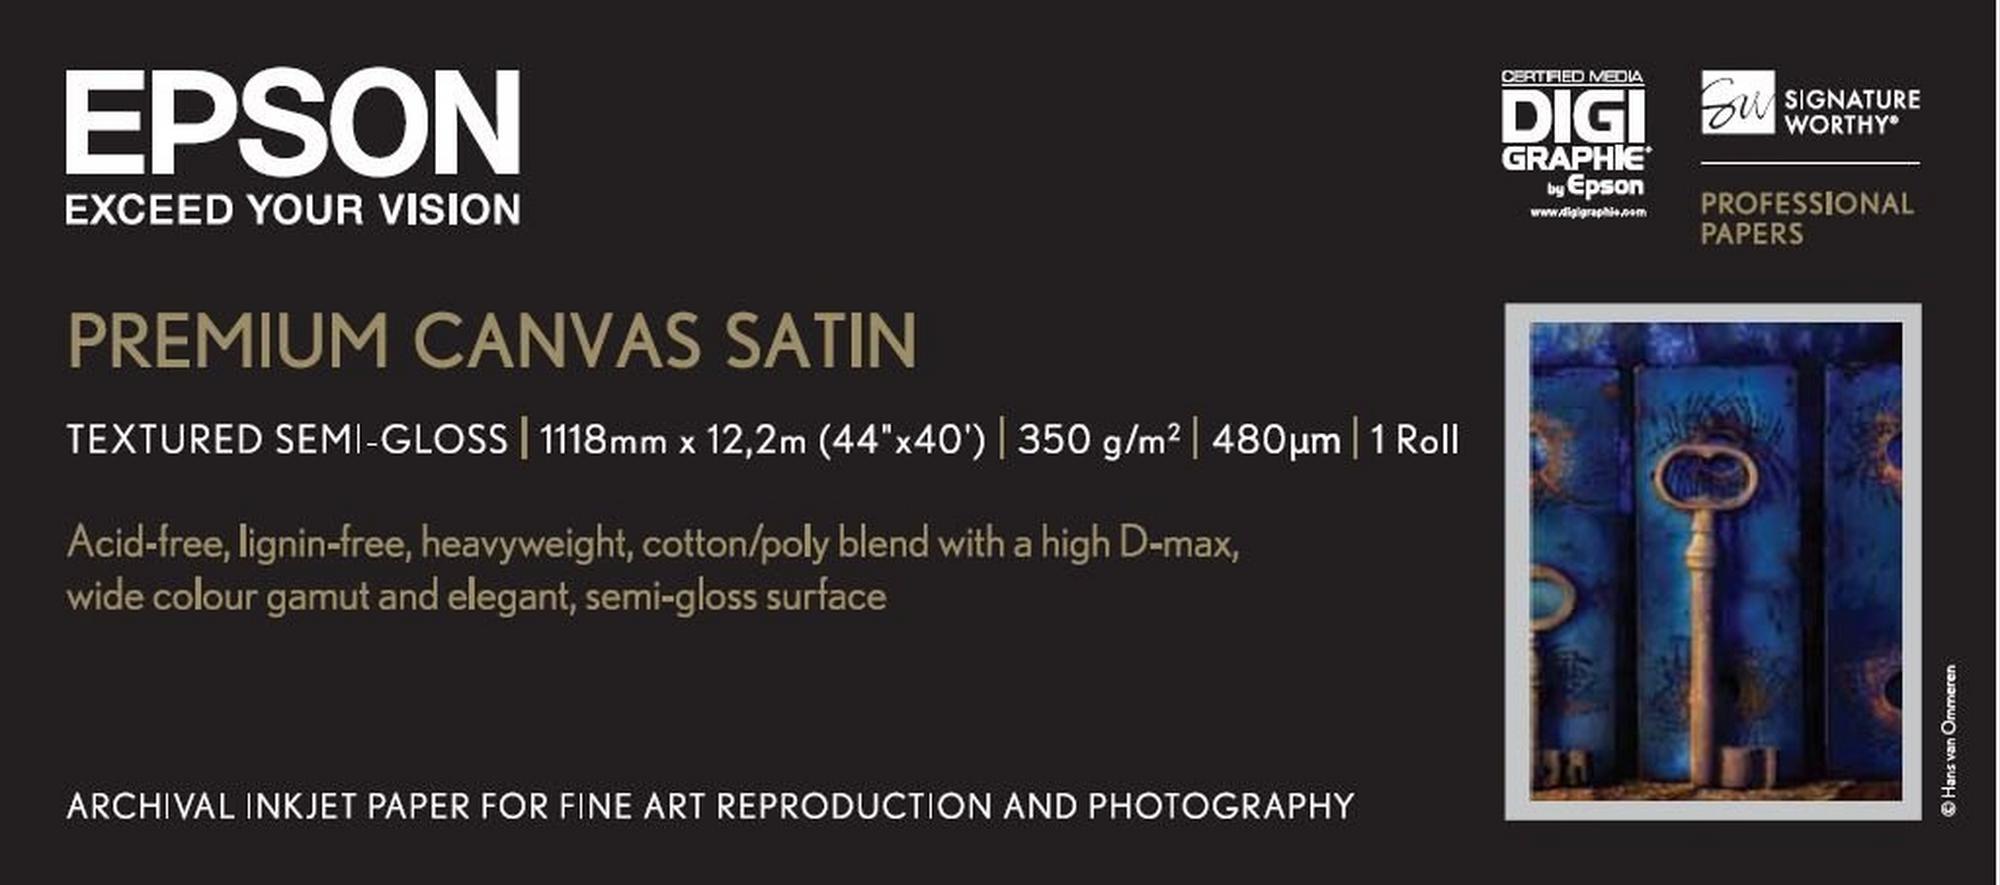 Epson Premium Canvas Satin, 44" x 12.2m, 350g/m²